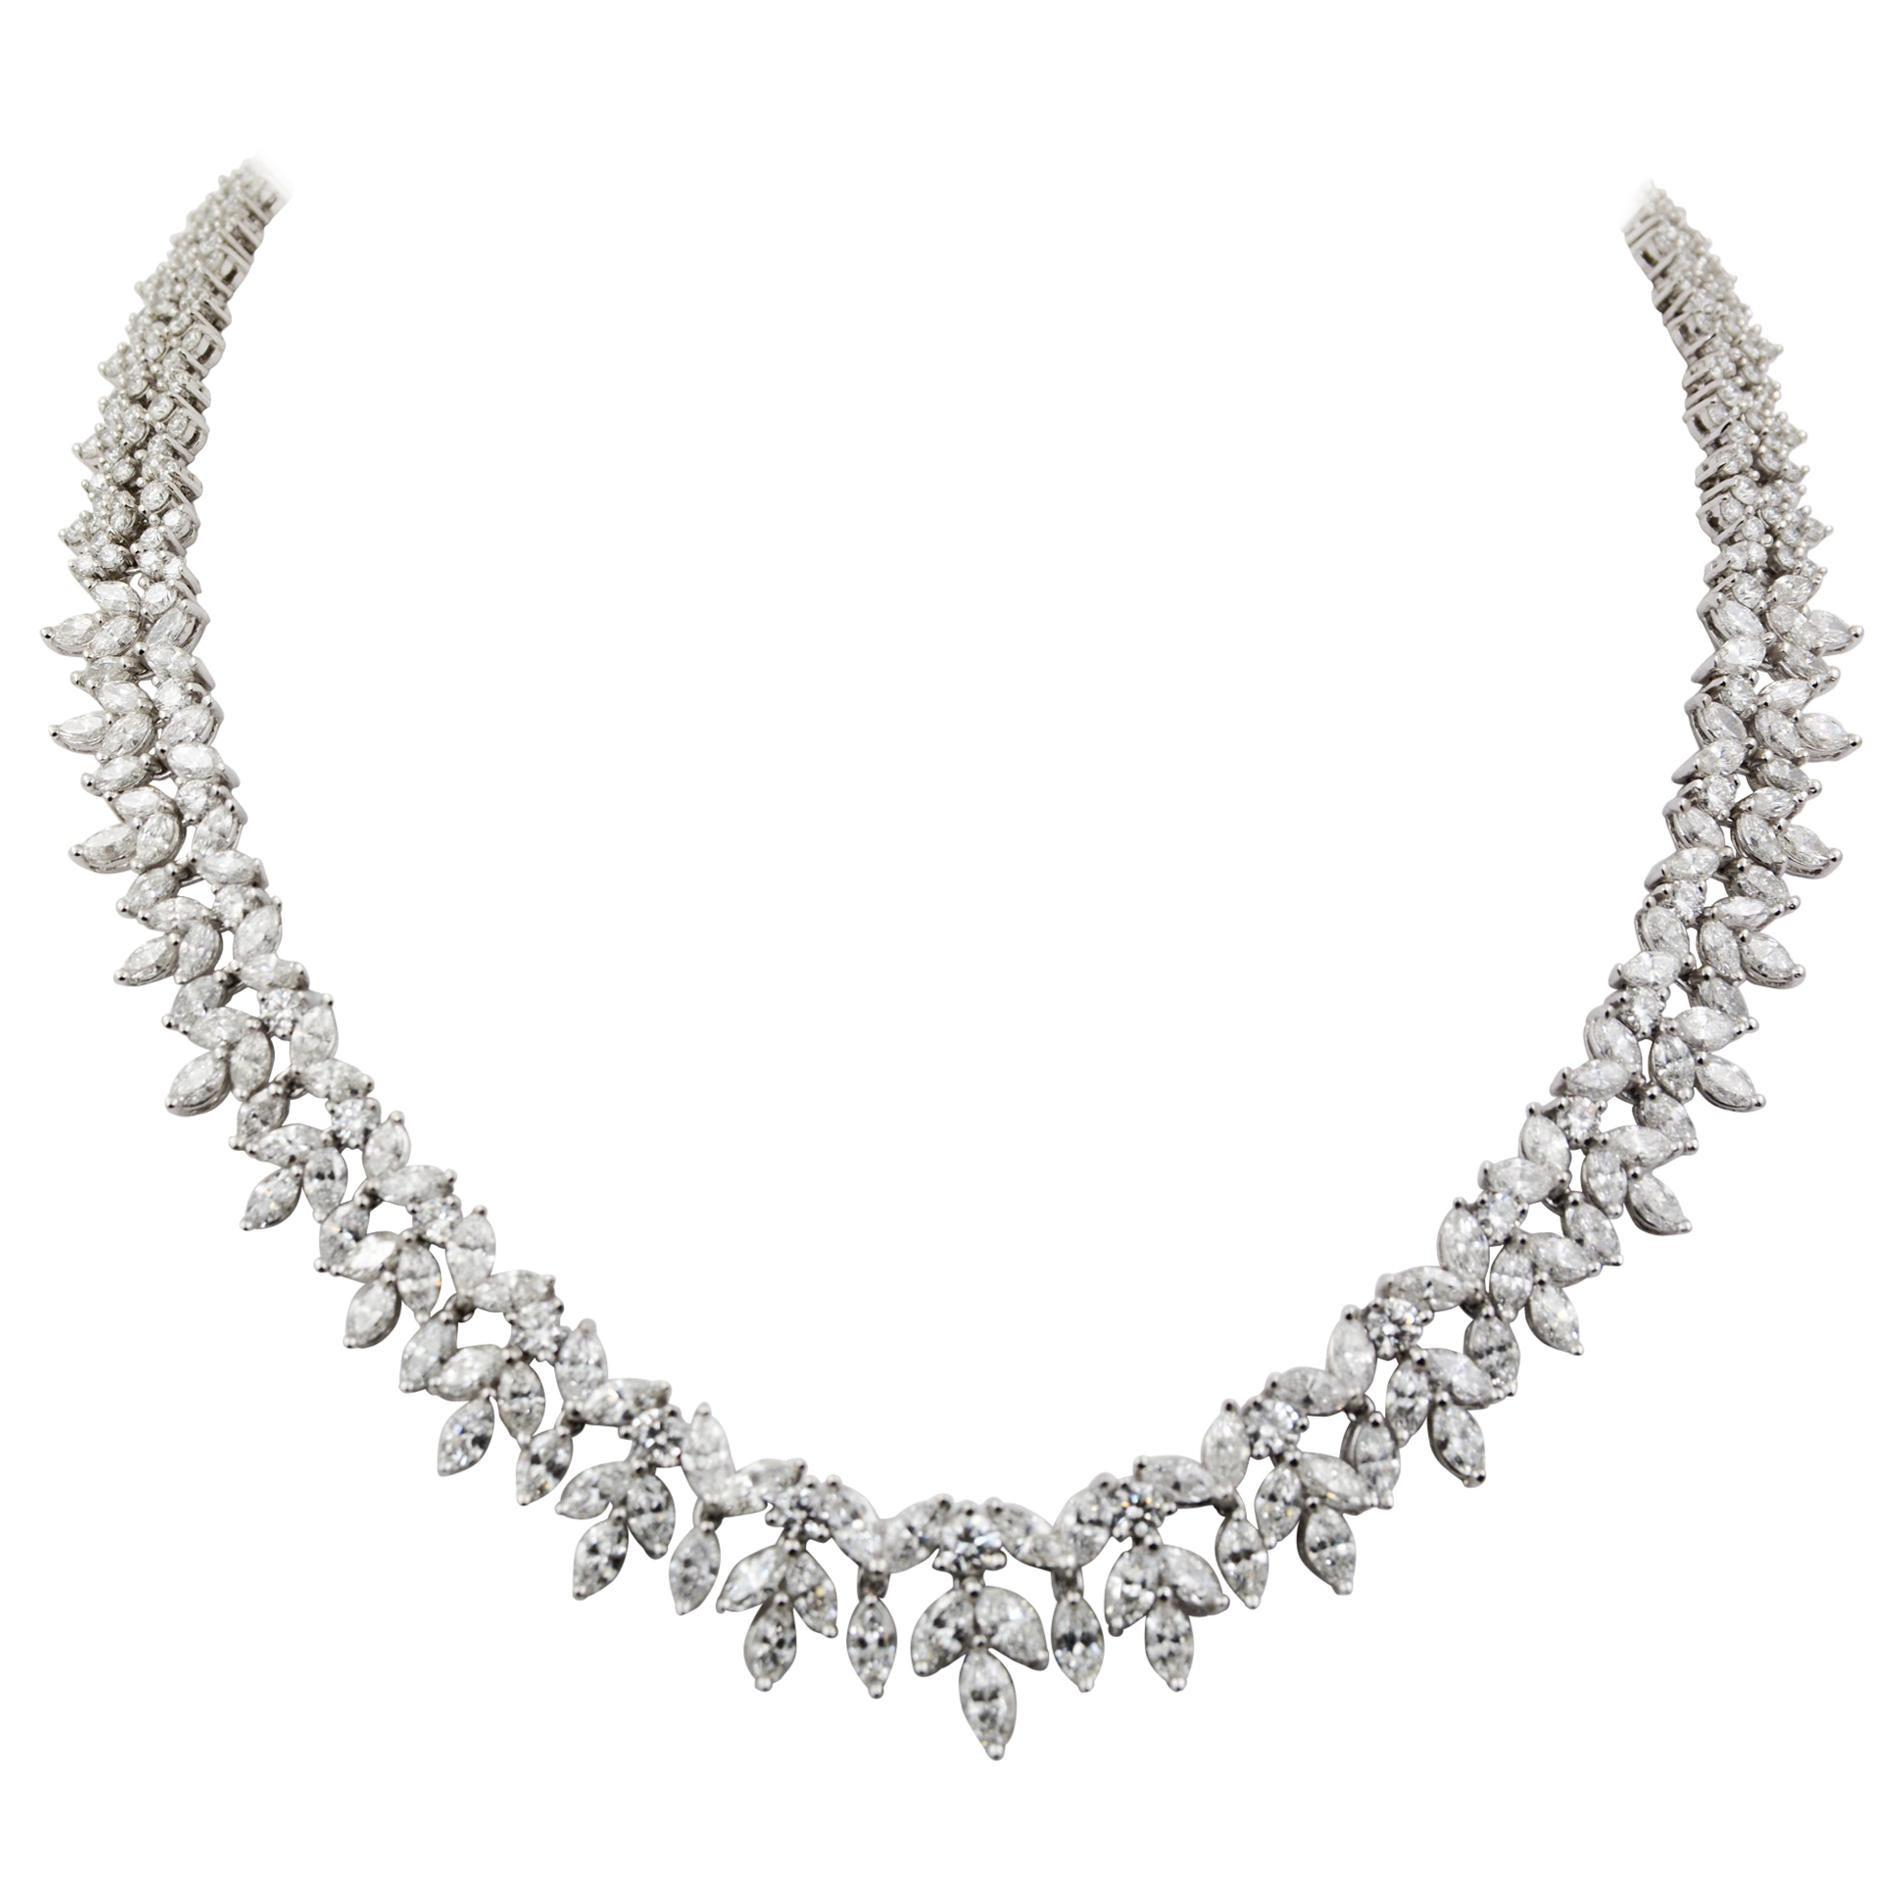 33.06 Carat Diamond and Platinum Two-Row Wreath Necklace